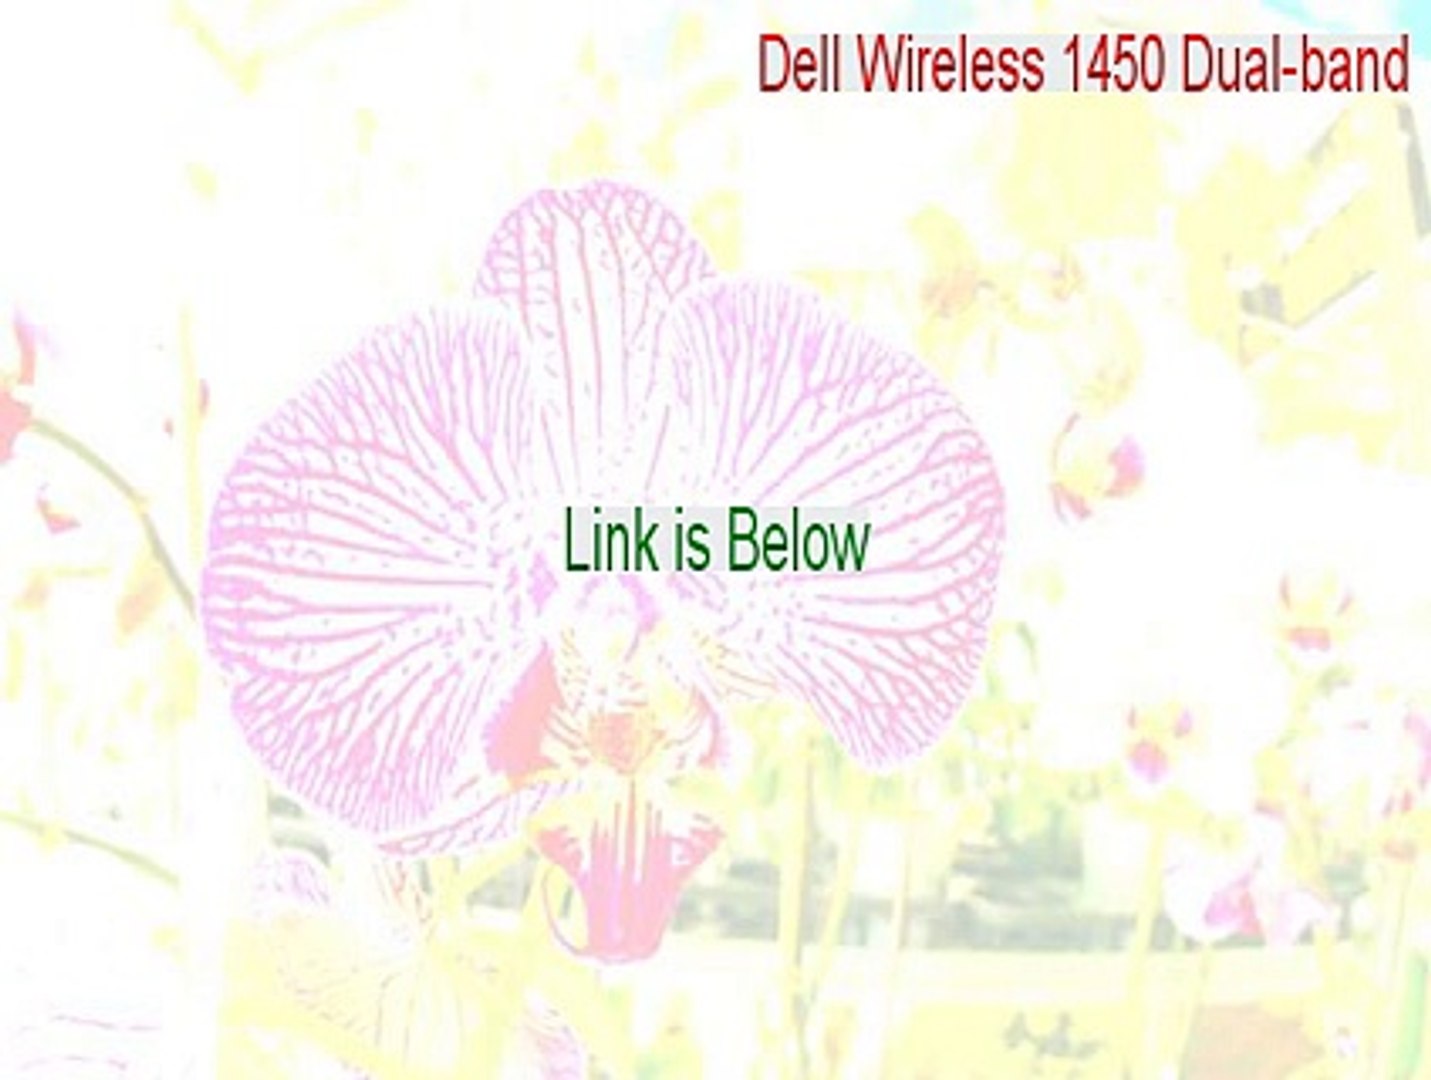 Dell Wireless 1450 Dual-band (802.11a/b/g) USB2.0 Adapter Key Gen - Legit  Download - video Dailymotion